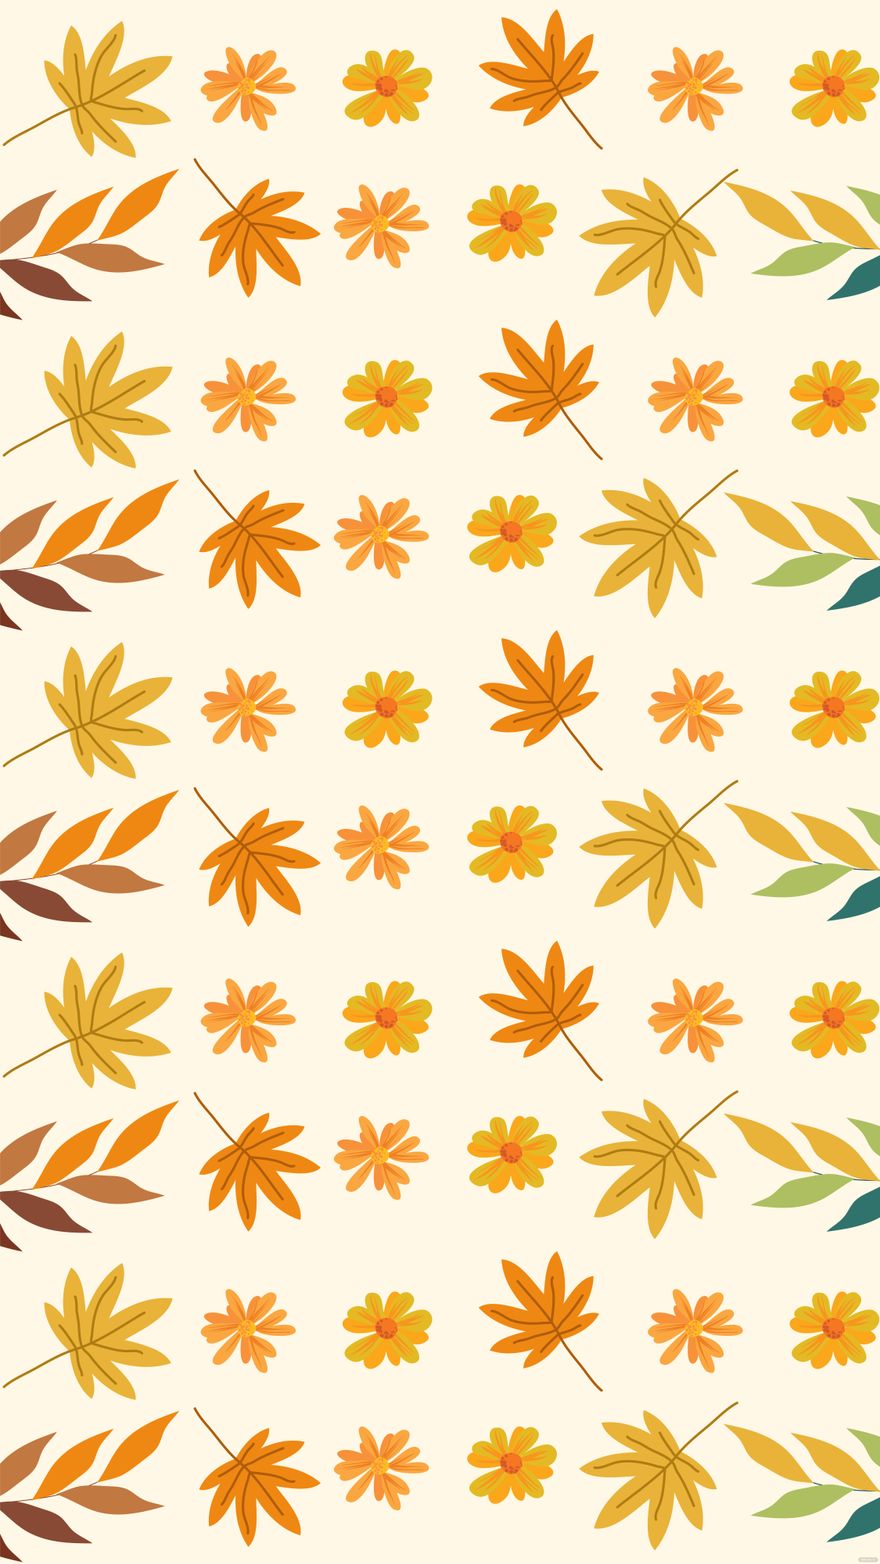 Fall Floral Pattern Background in Illustrator, EPS, SVG, JPG